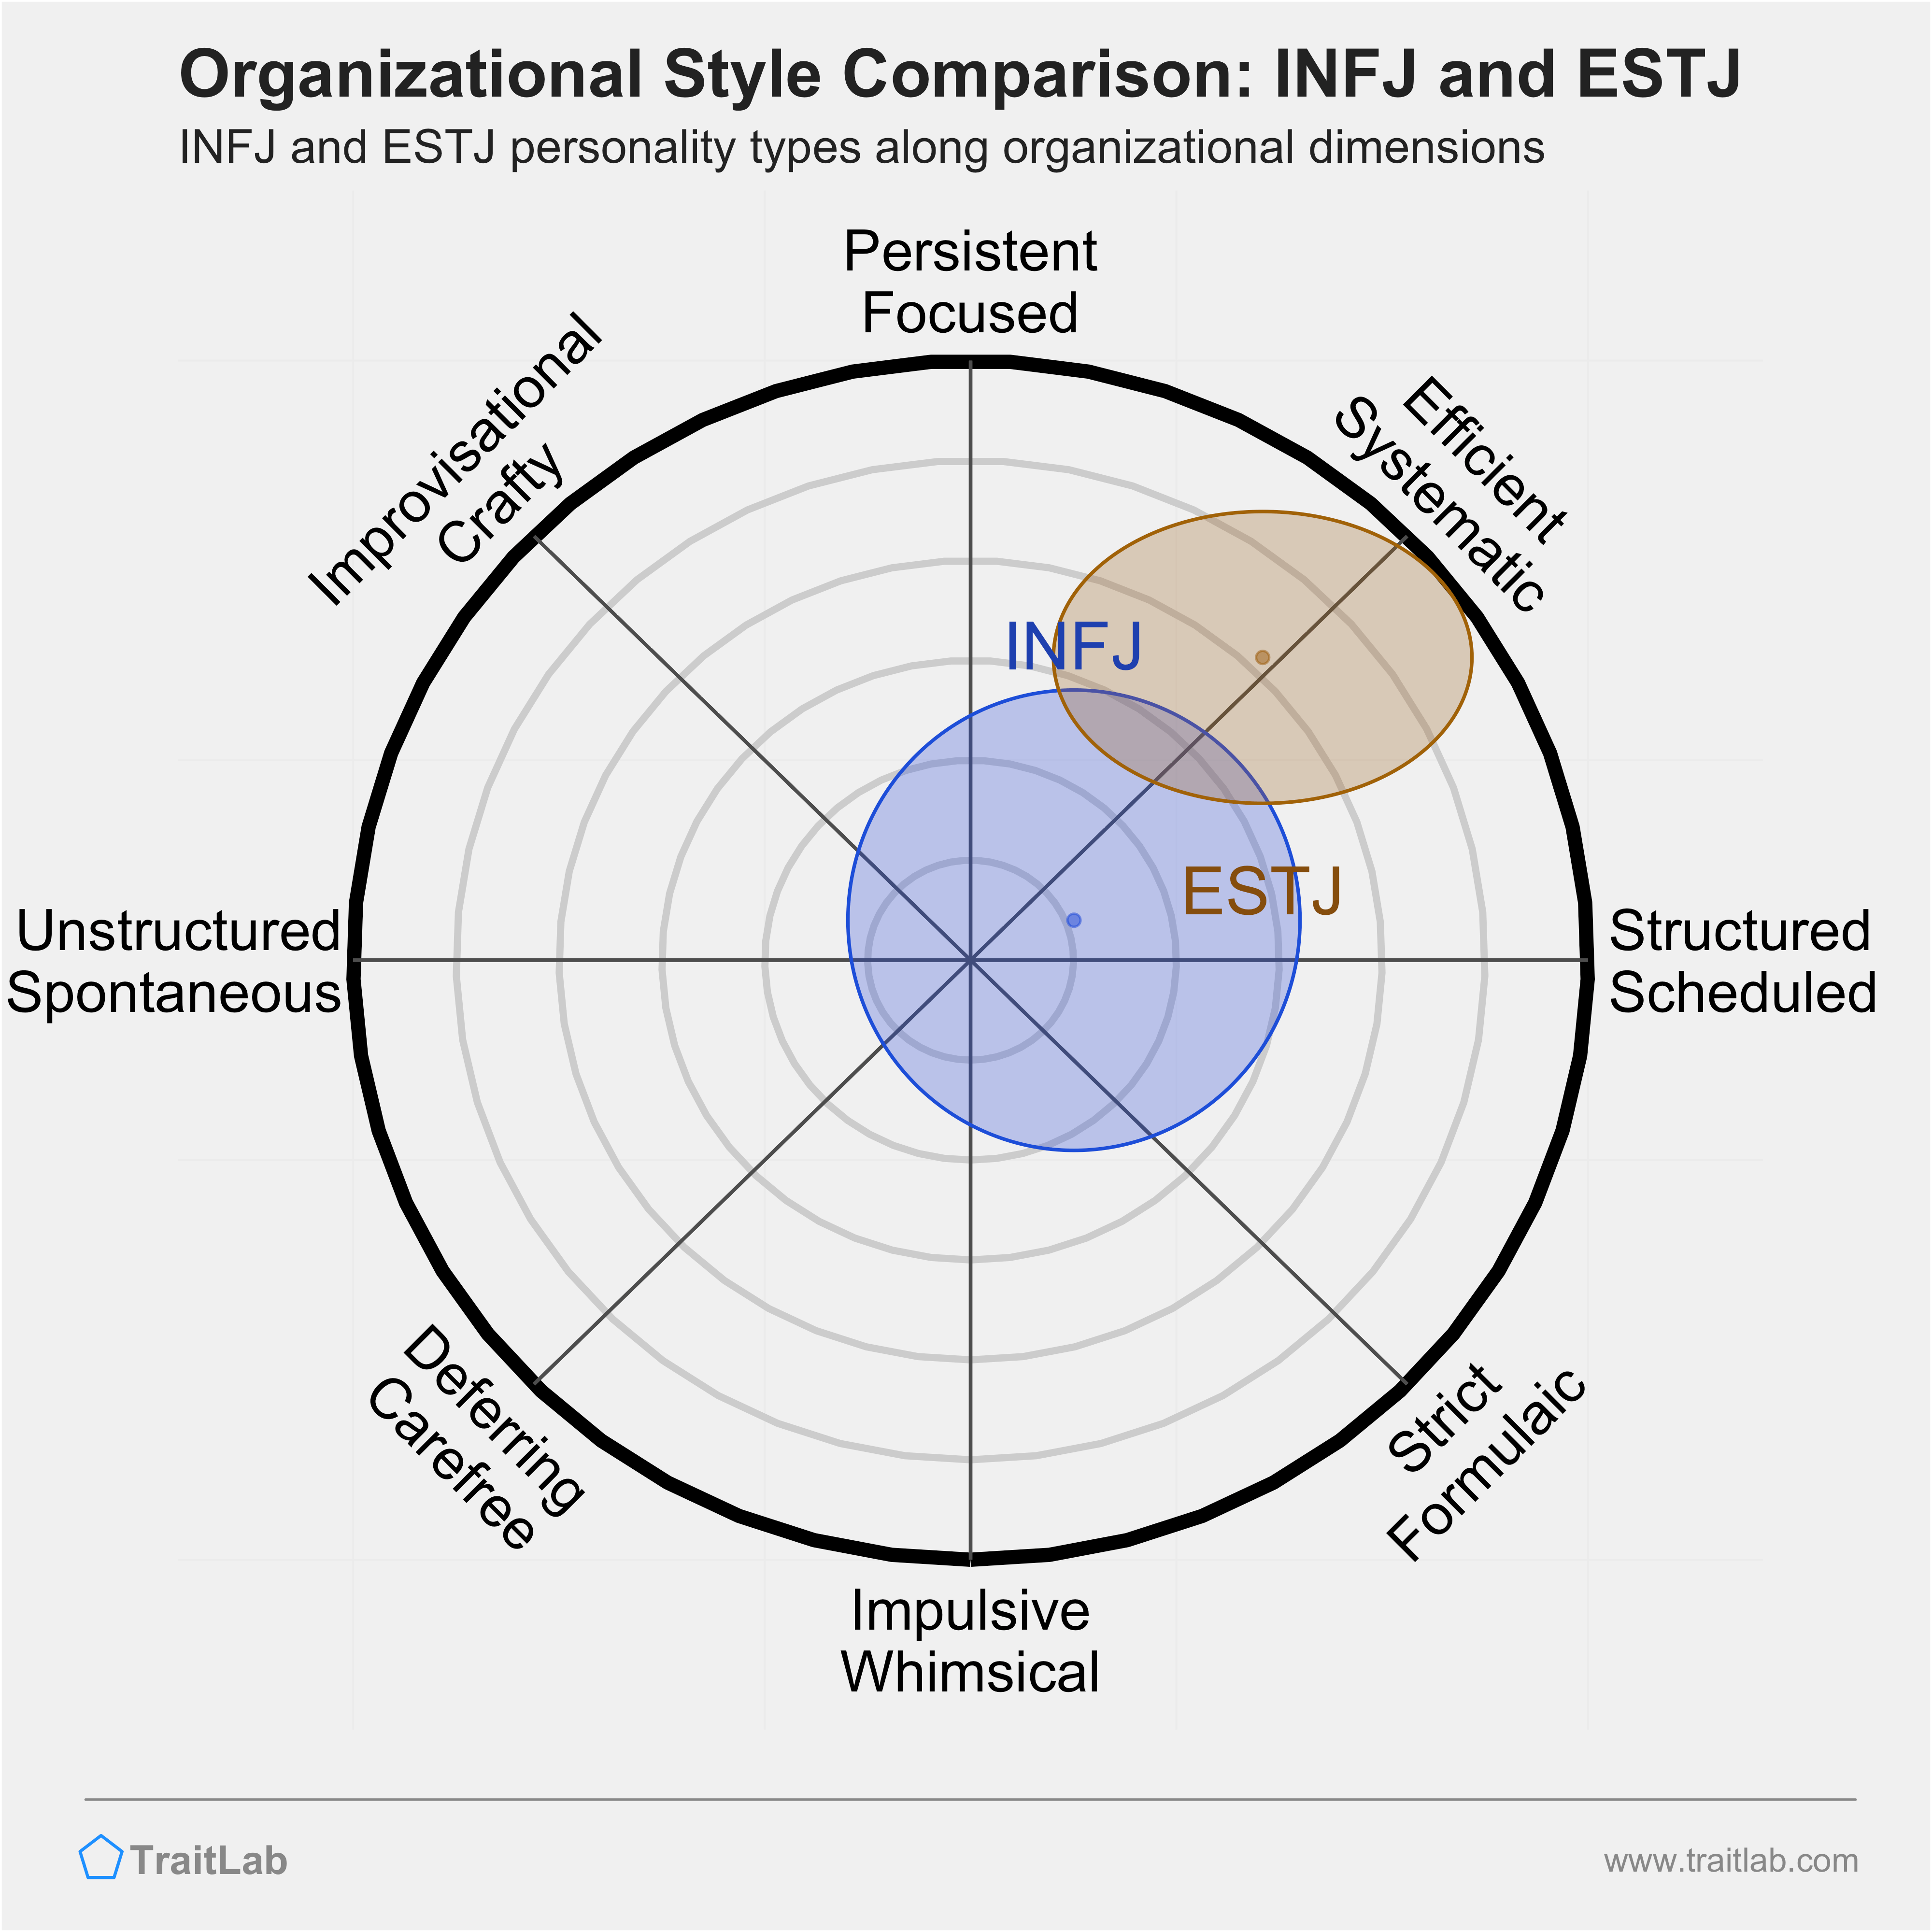 INFJ and ESTJ comparison across organizational dimensions